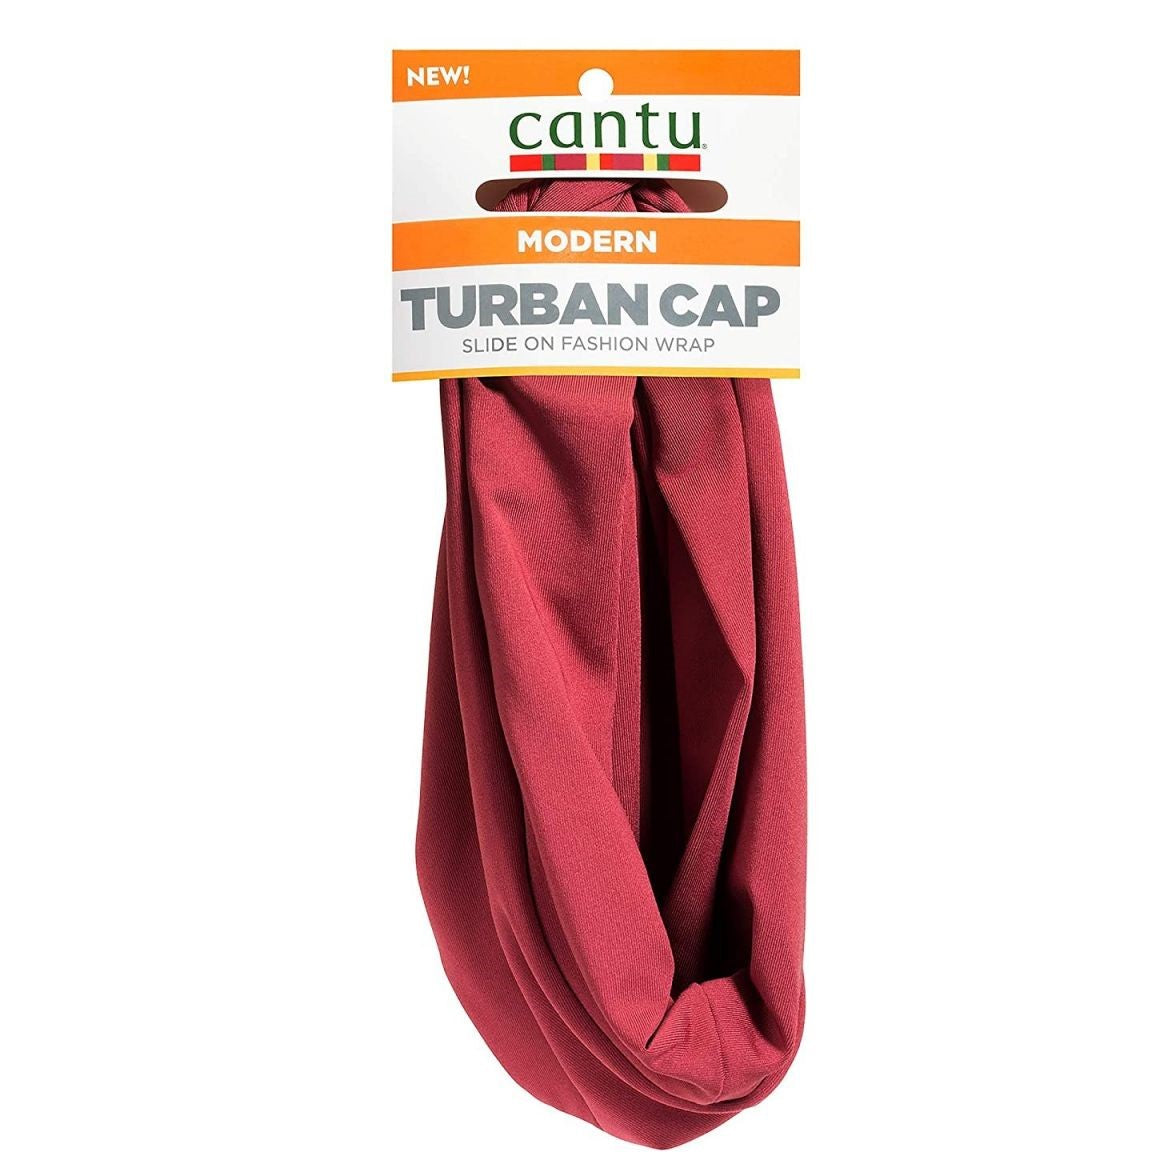 Cantu Turban Cap Slide On Fashion Band